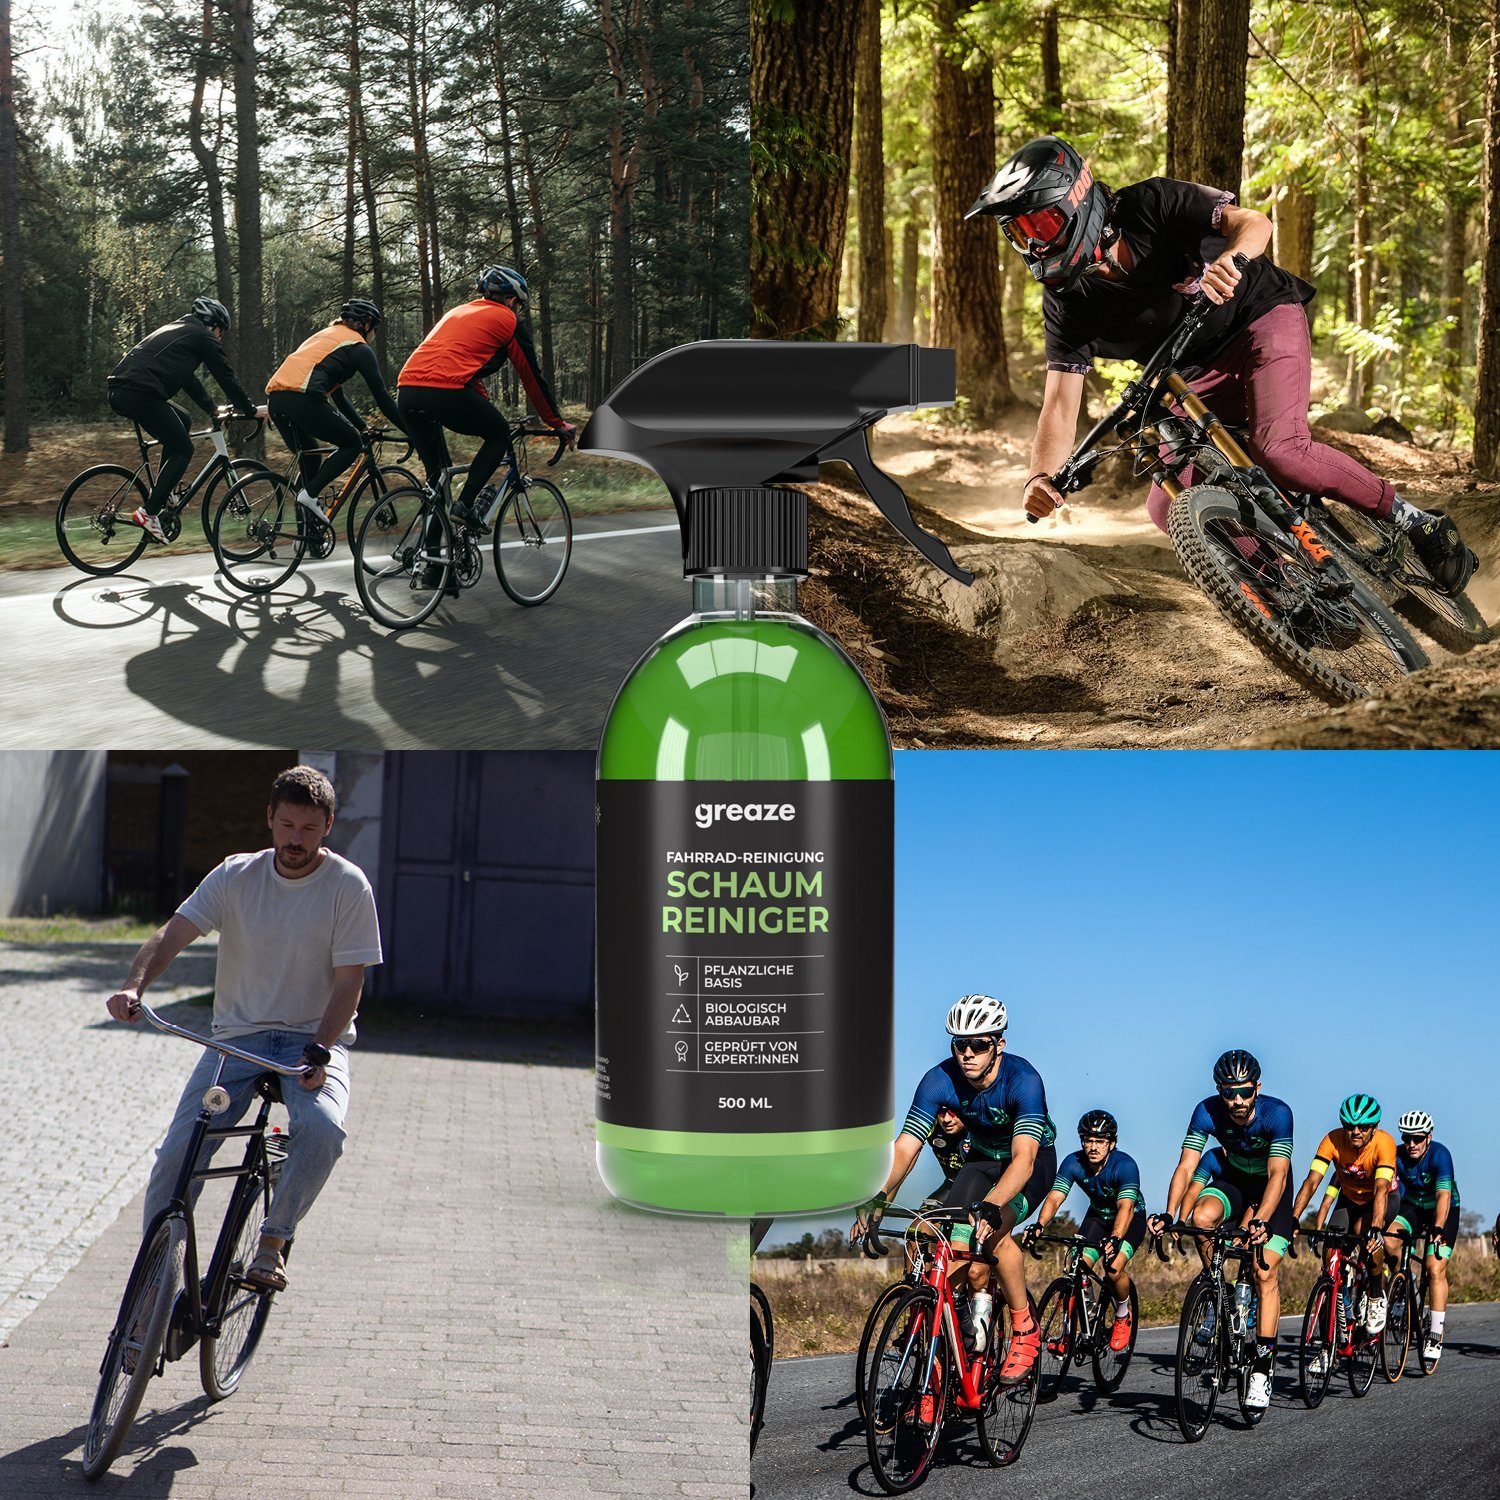 biologisch abbaubar greaze Schaumreiniger Spray Fahrradketten Reiniger Fahrrad